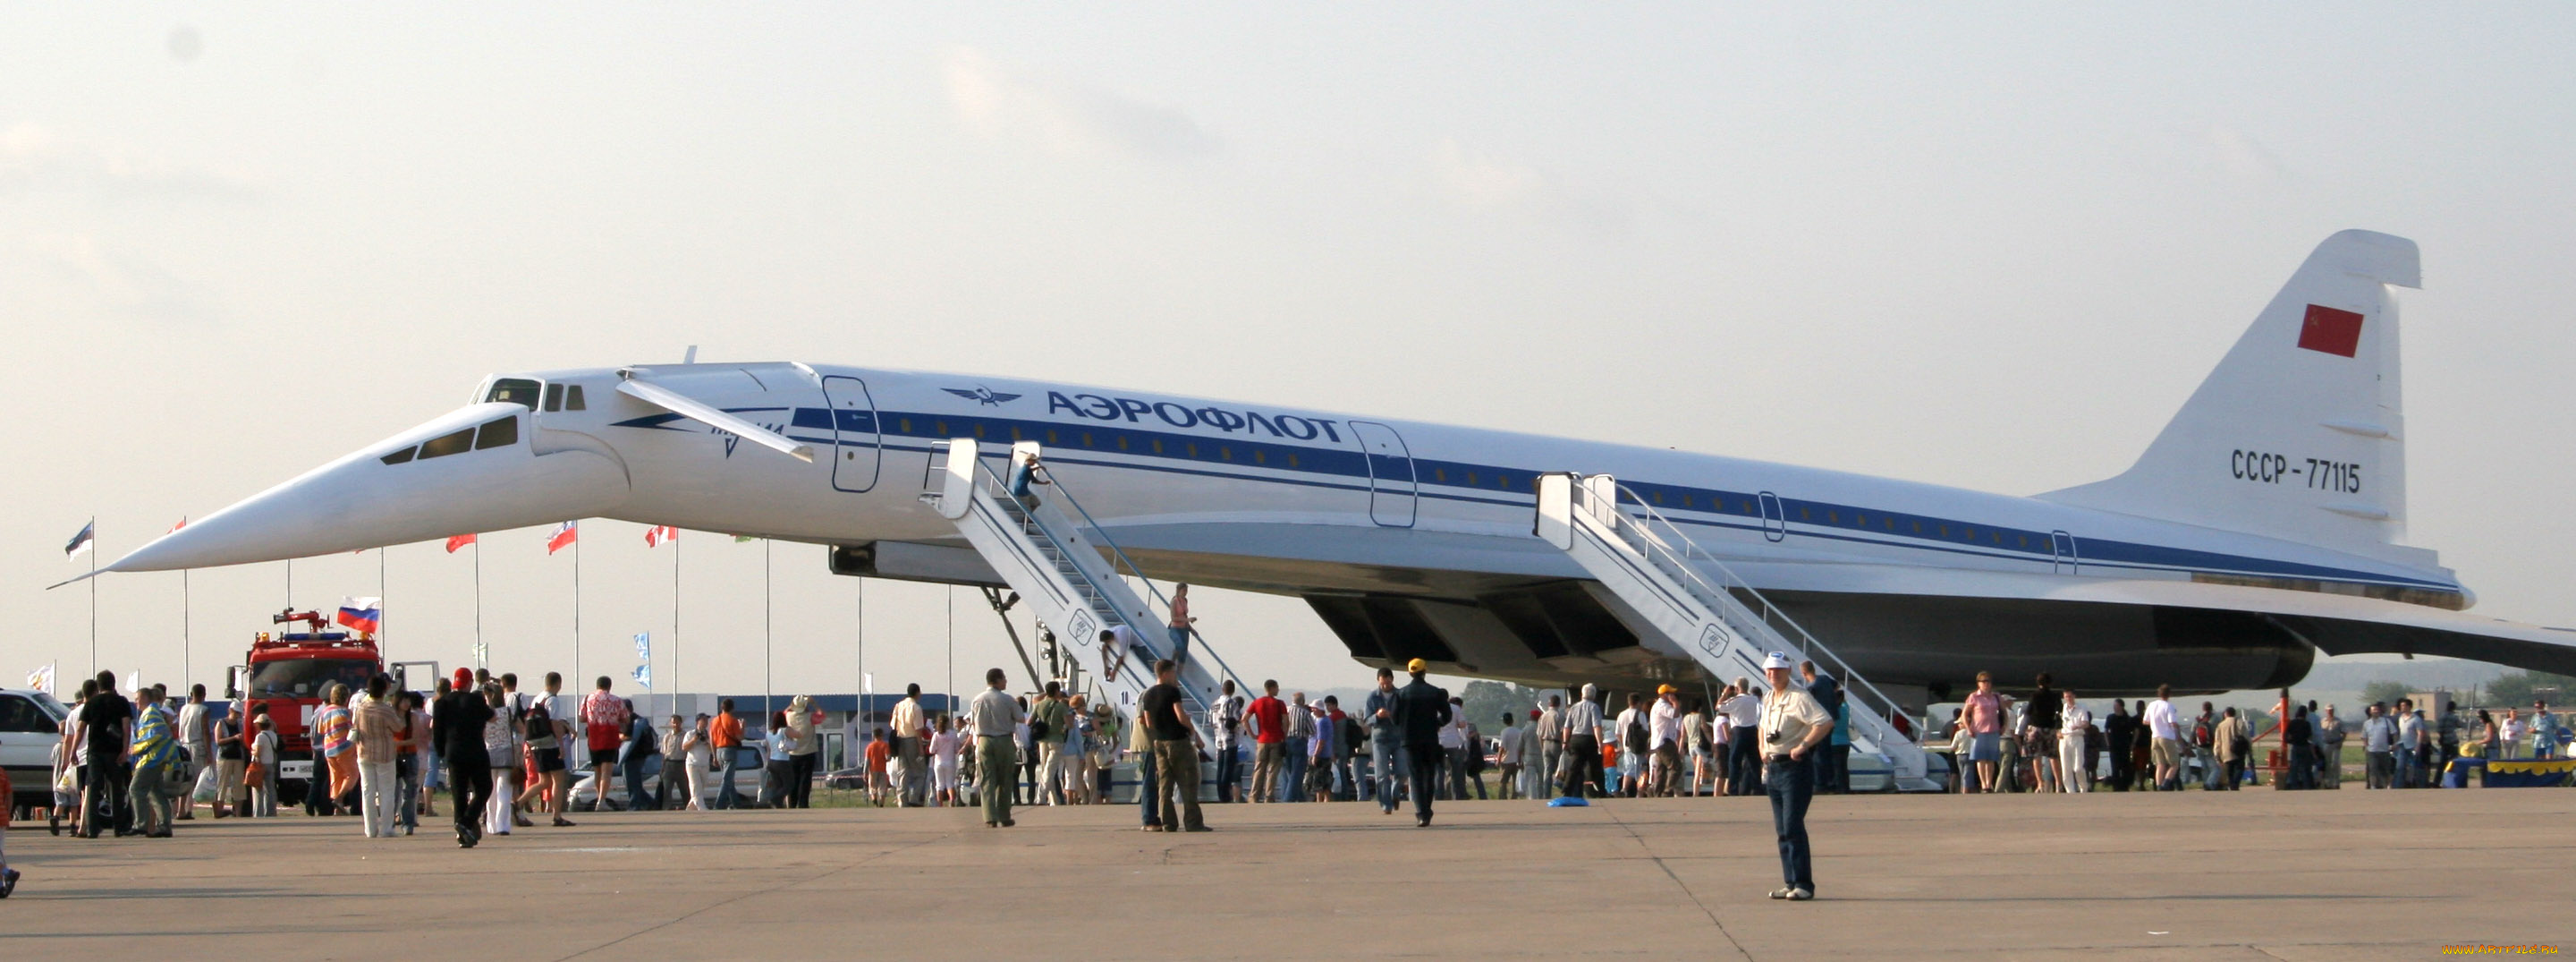 tupelov, tu, 144ll, at, 2007, exibition, авиация, пассажирские, самолёты, лайнер, сверхзвуковой, пассажирский